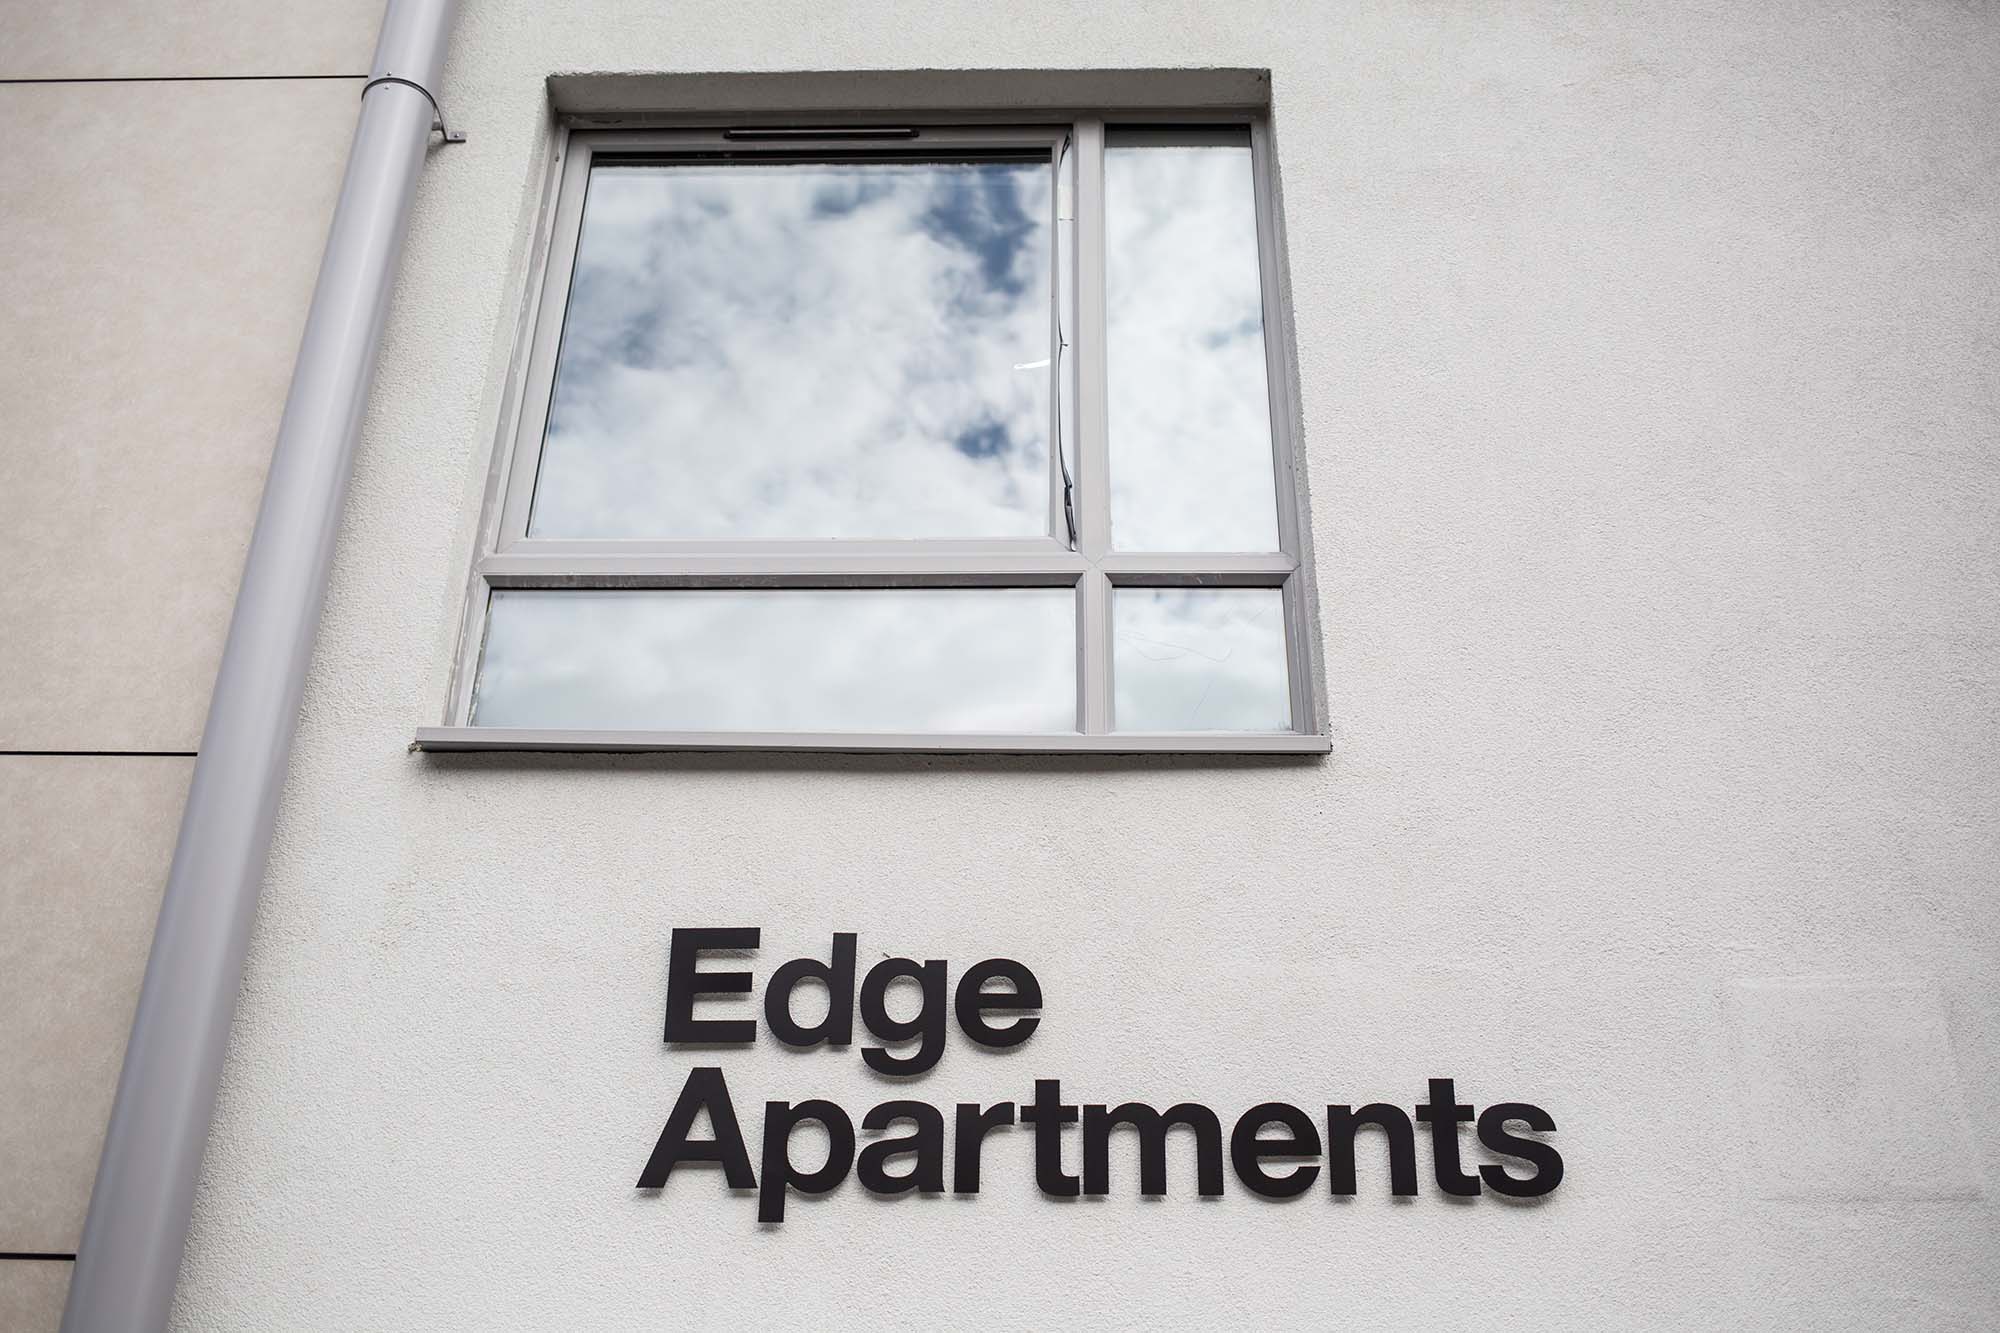 Edge Apartments, Birmingham: New-build student accommodation.